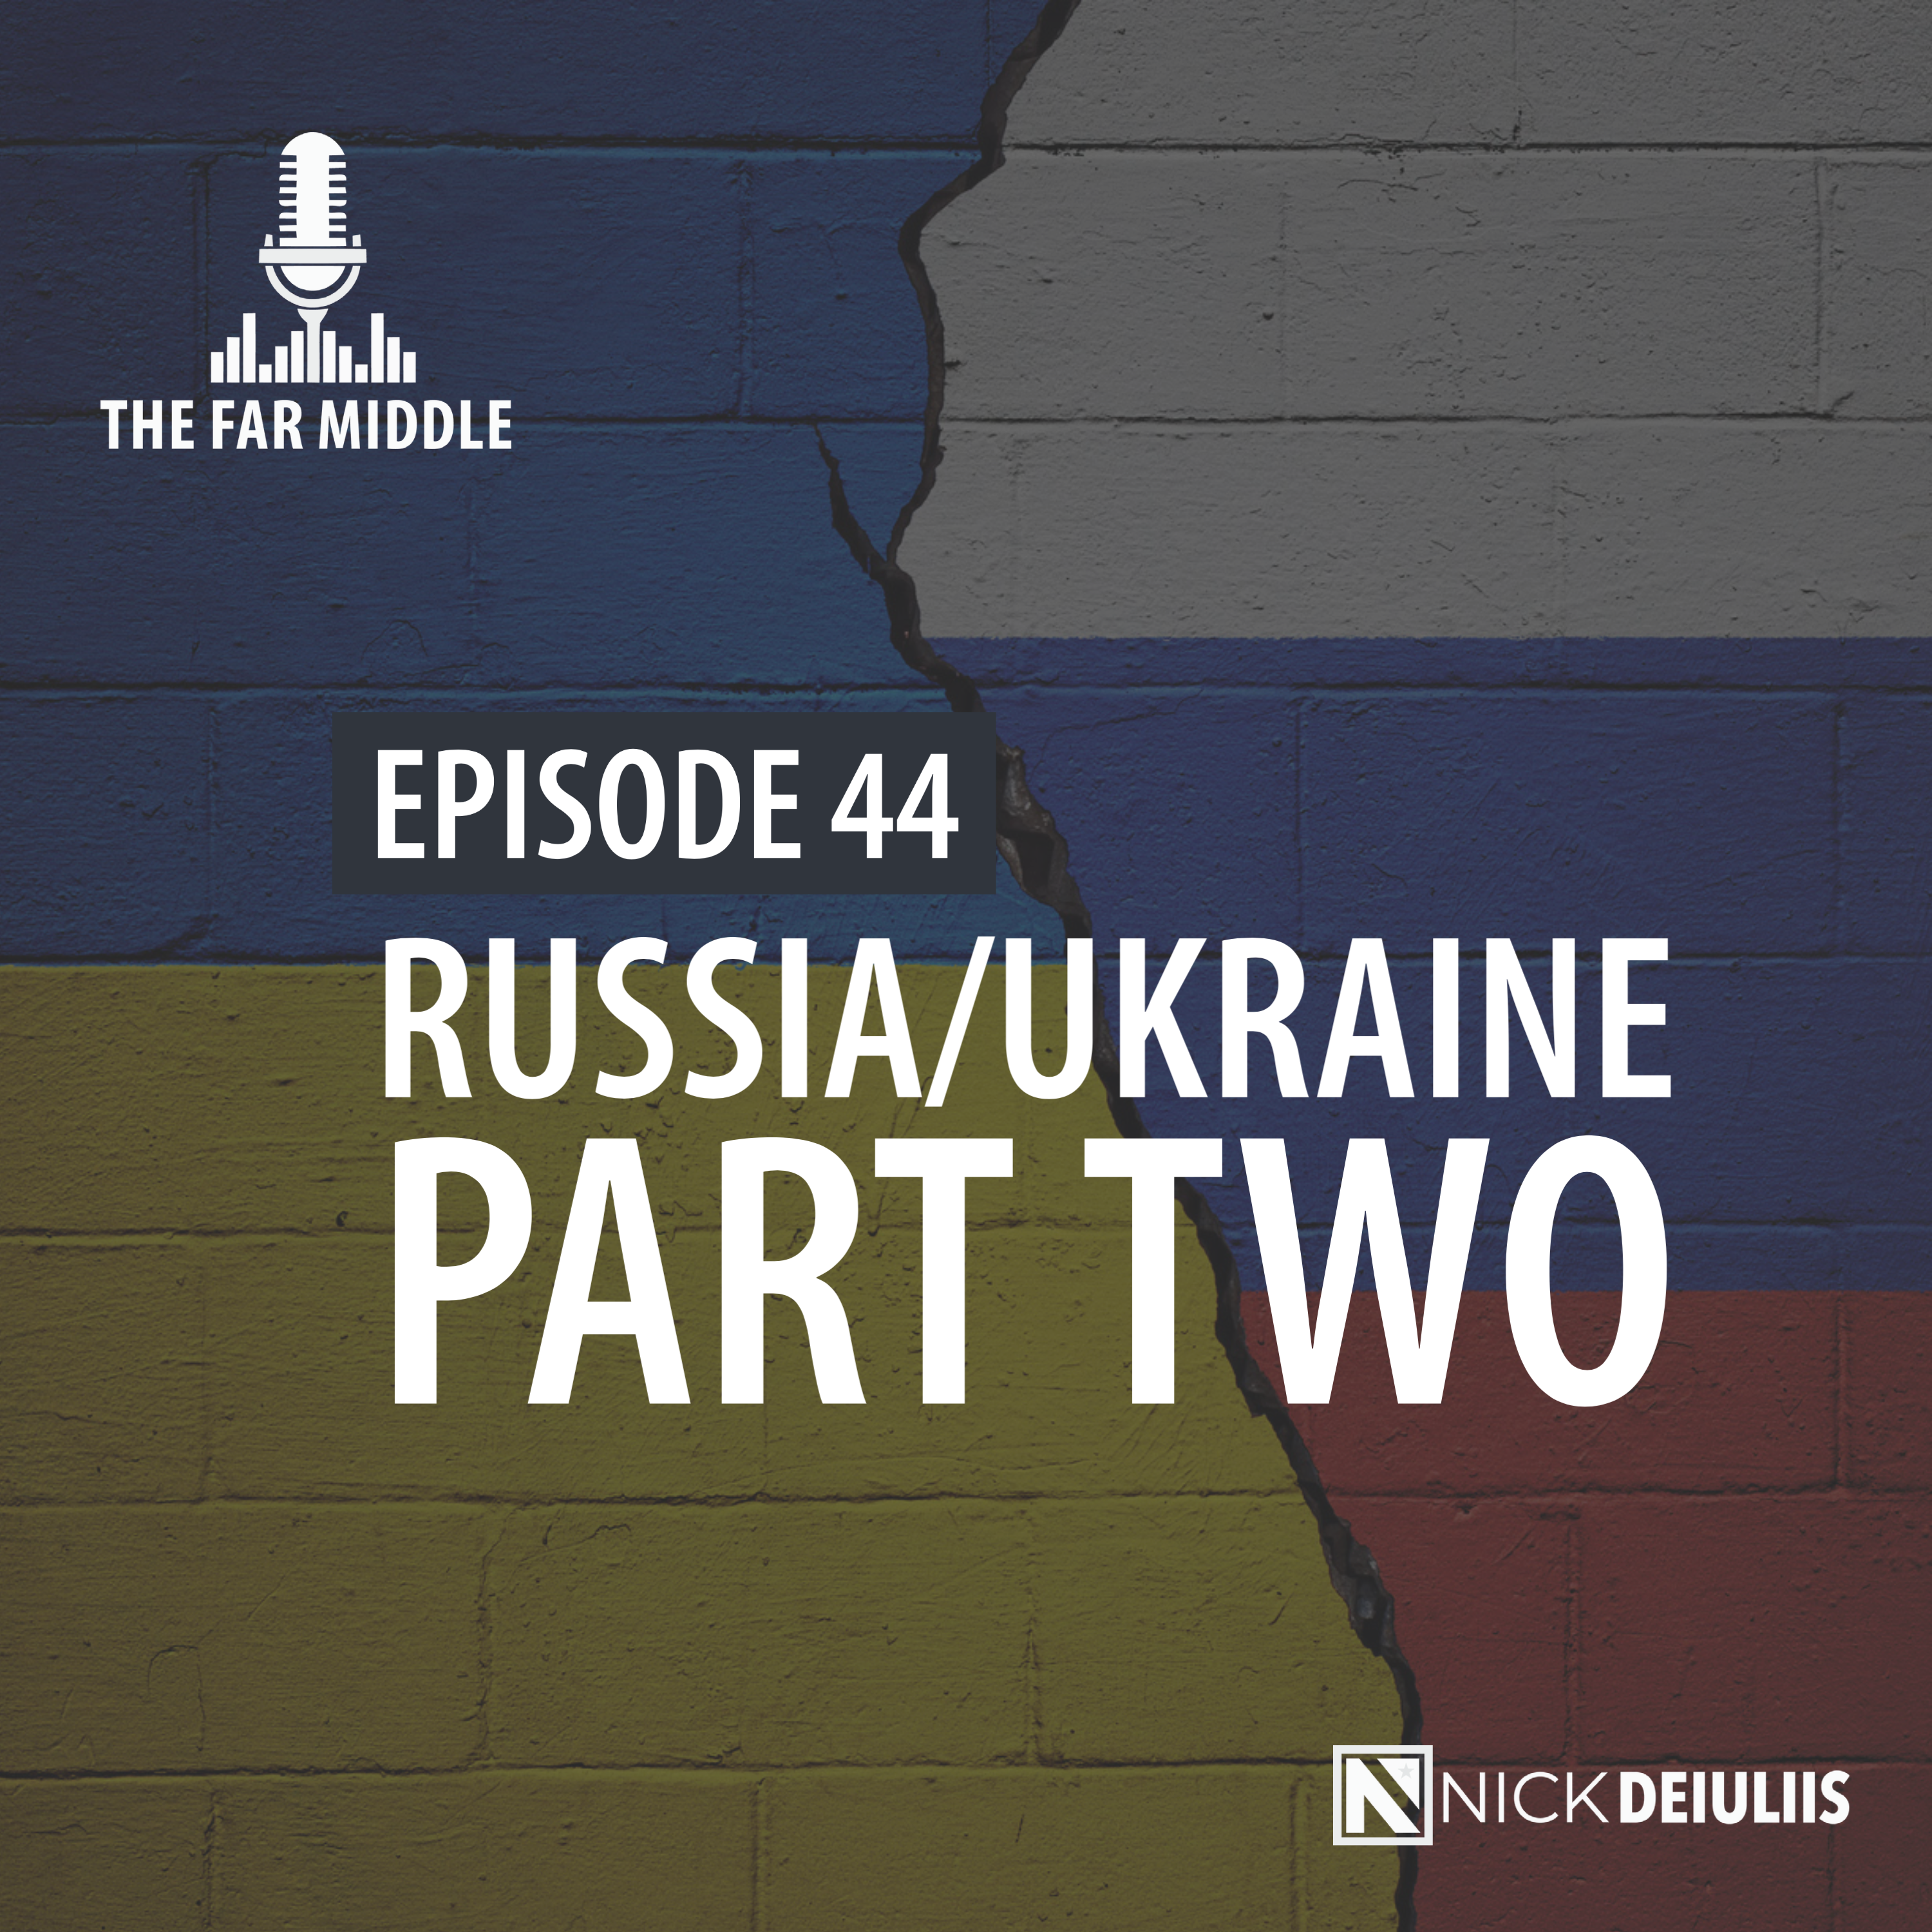 Russia/Ukraine Part Two